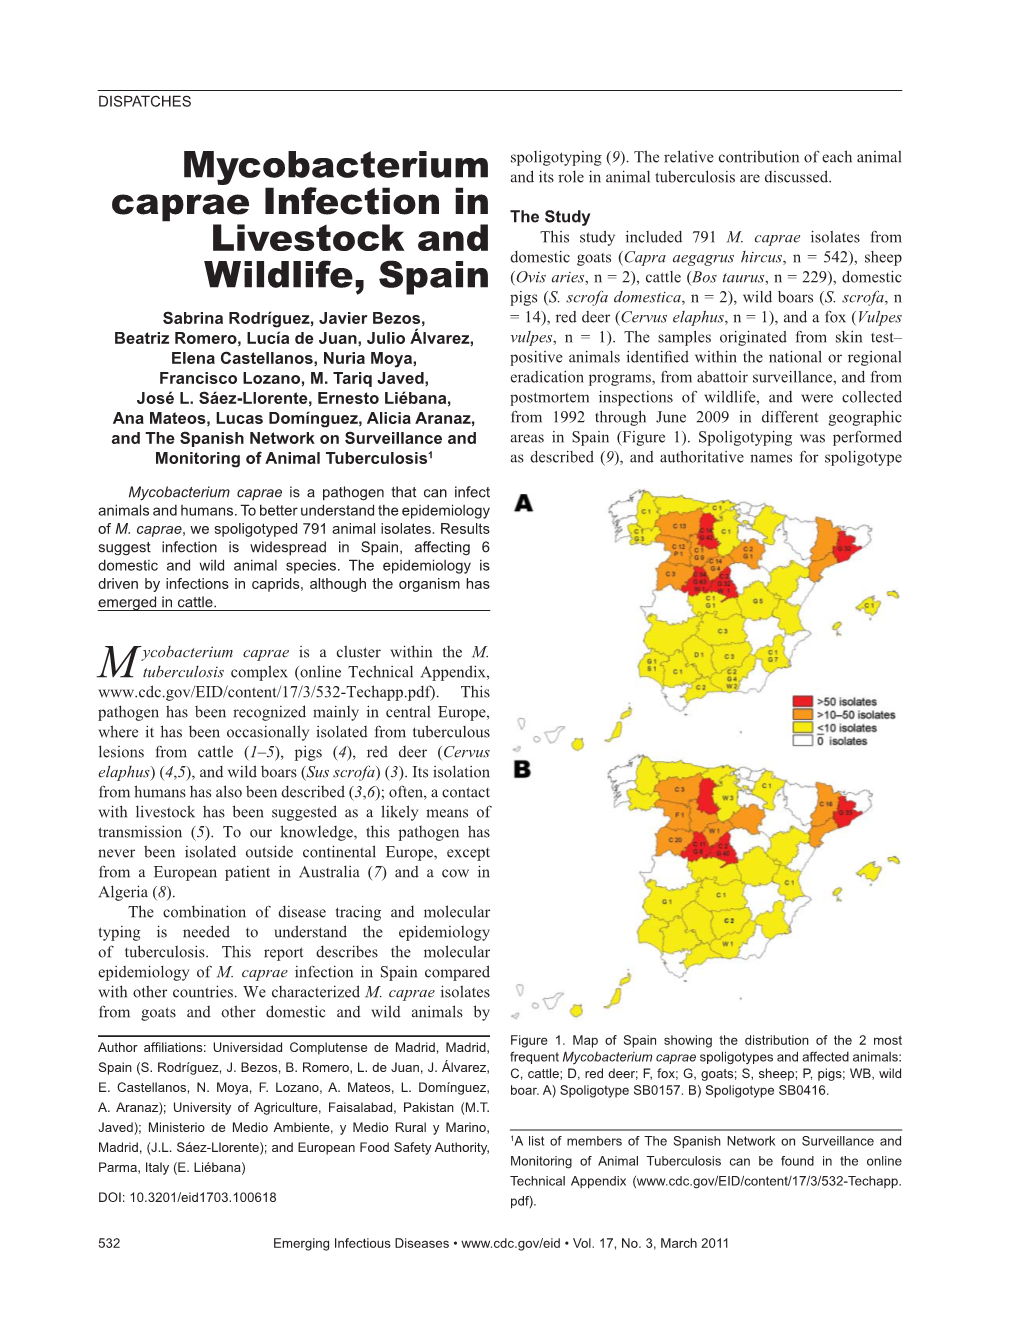 Mycobacterium Caprae Infection in Livestock and Wildlife, Spain